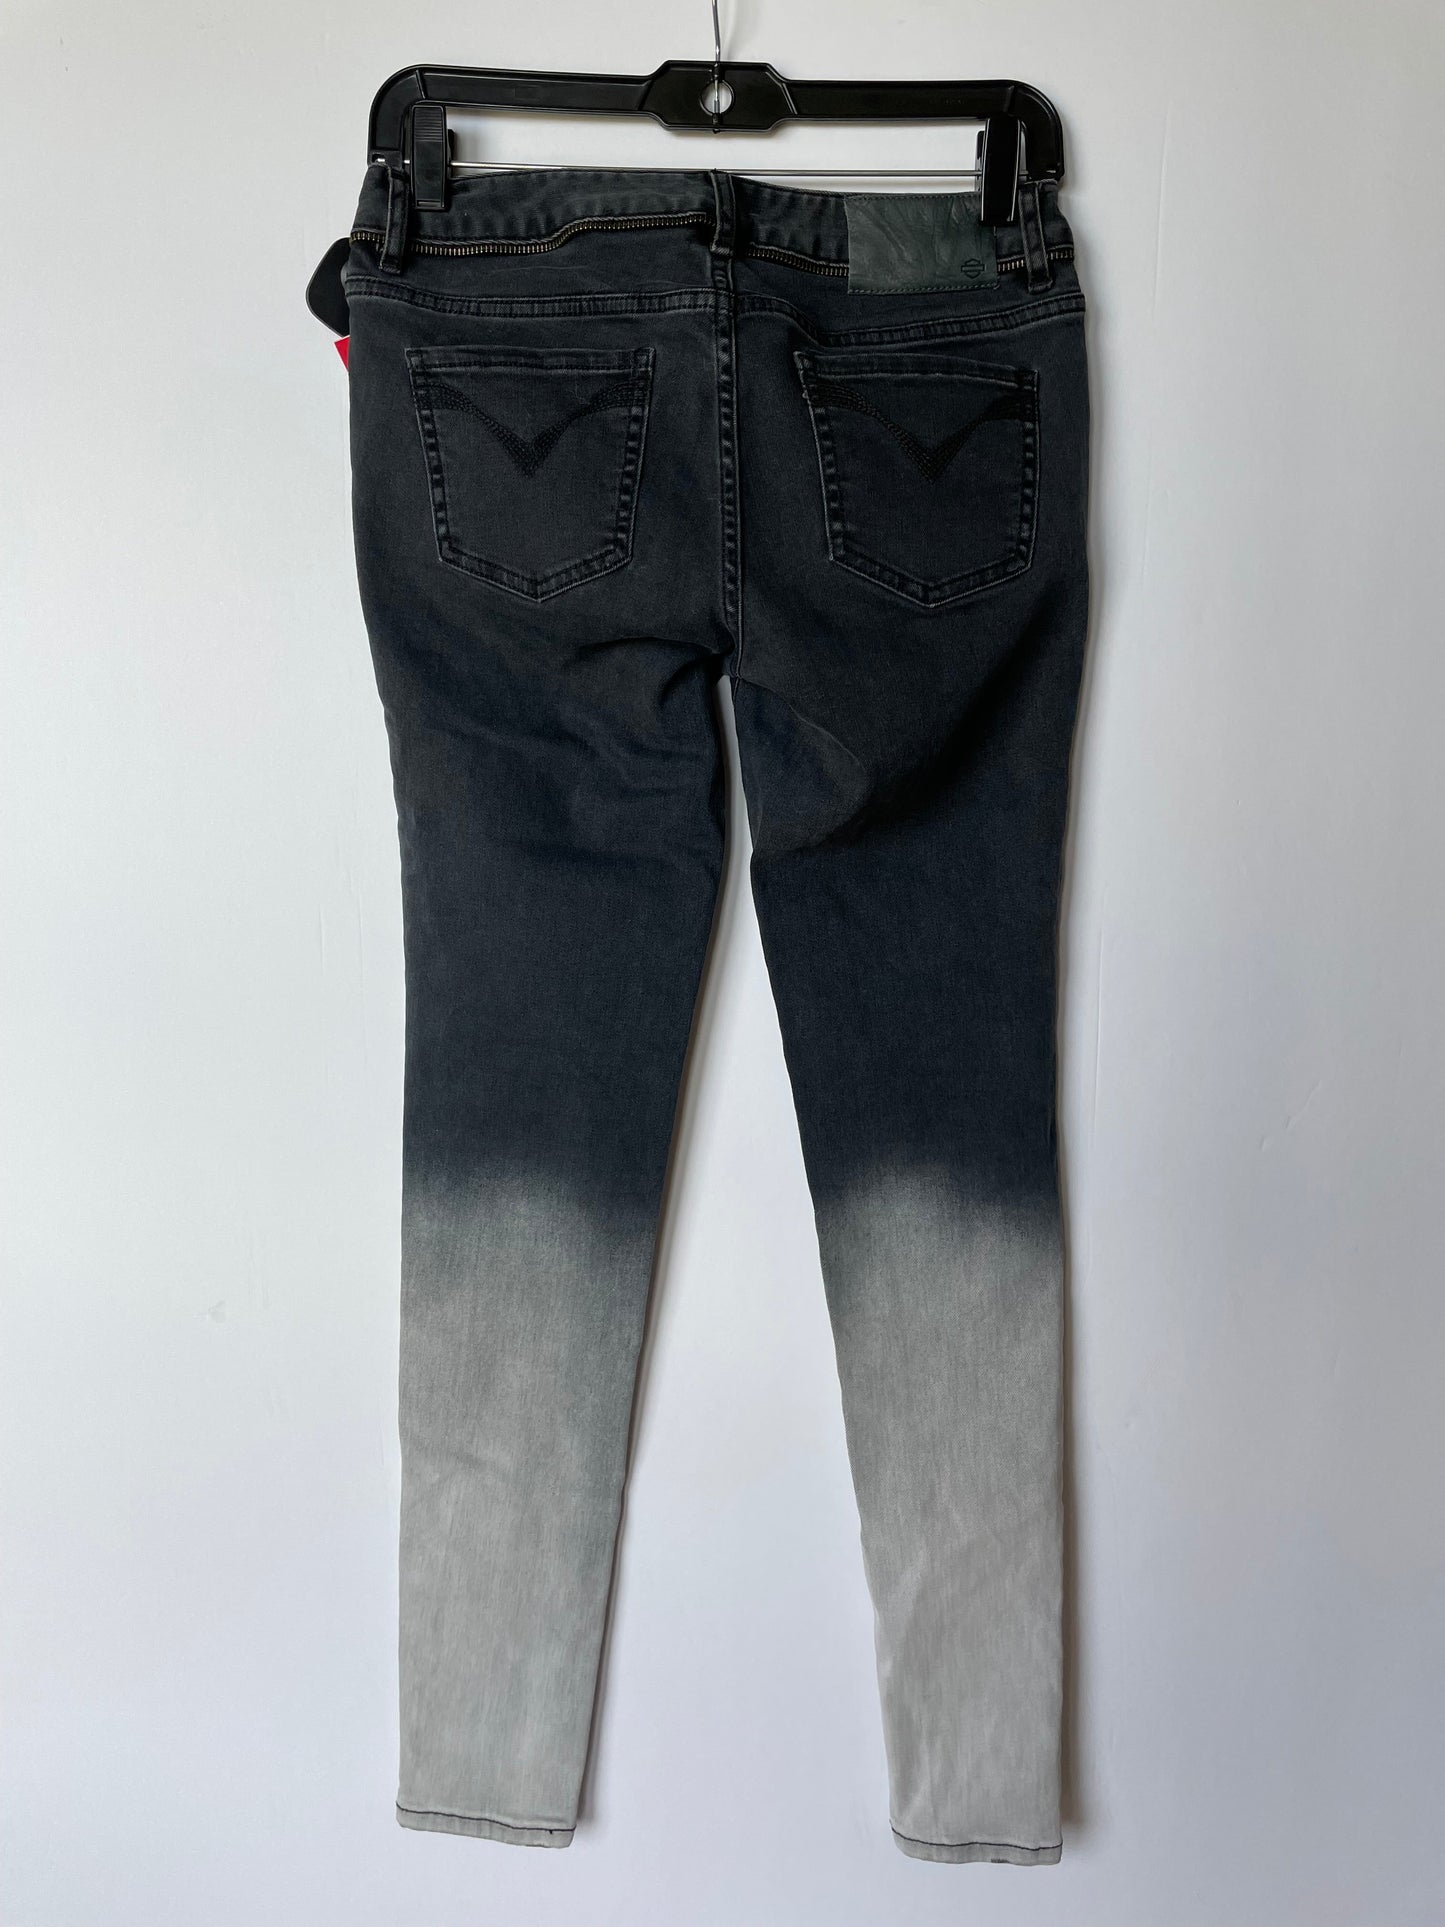 Jeans Skinny By Harley Davidson  Size: 2